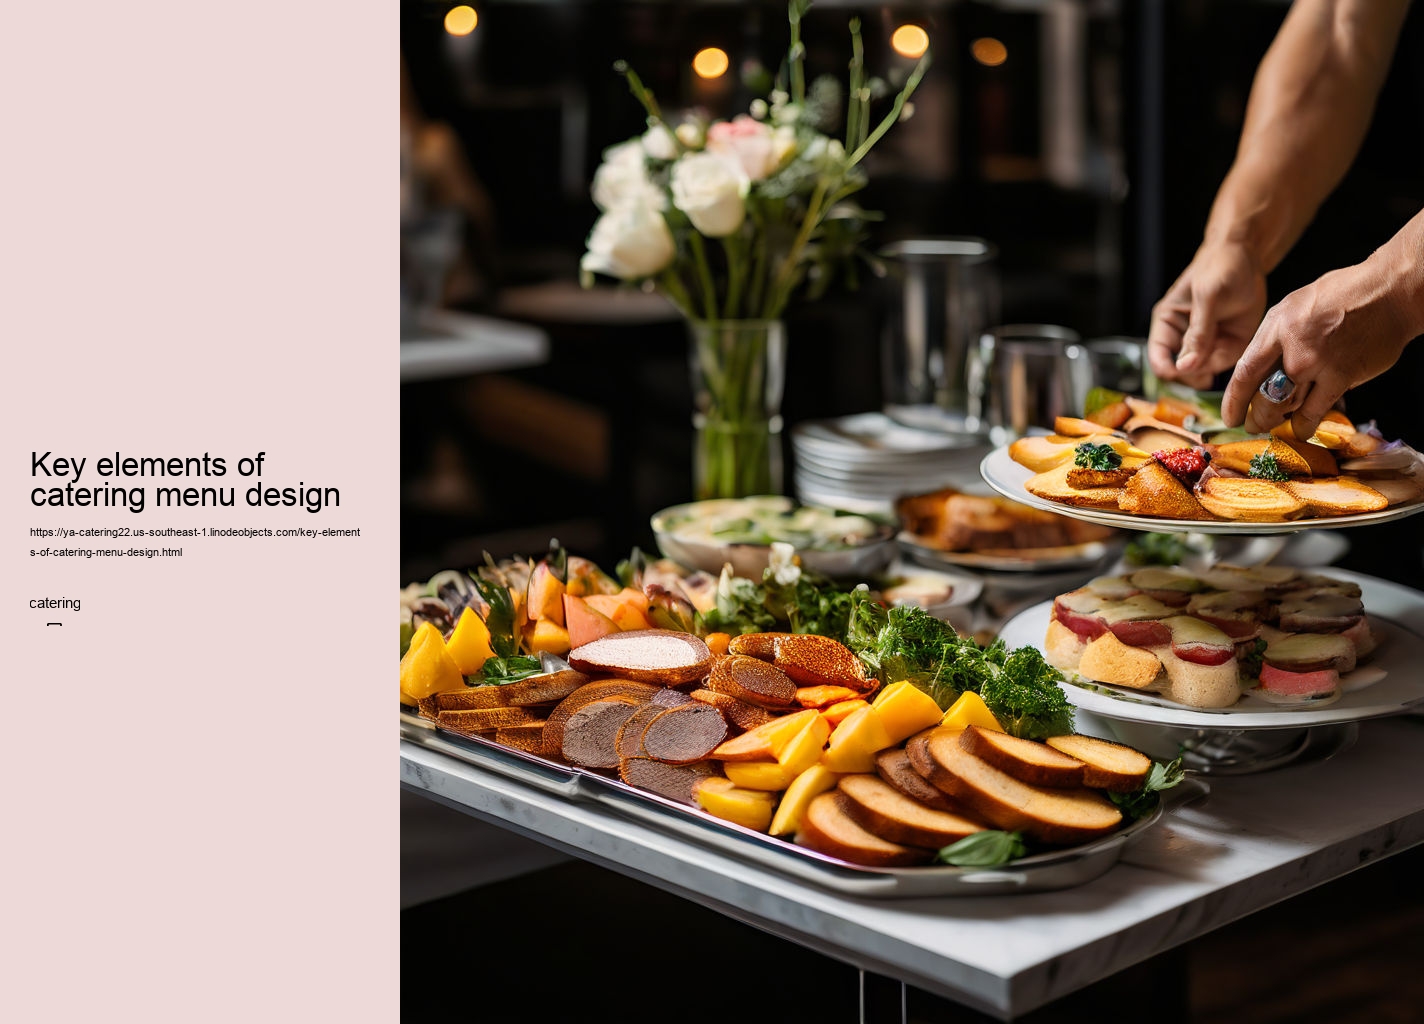 Key elements of catering menu design